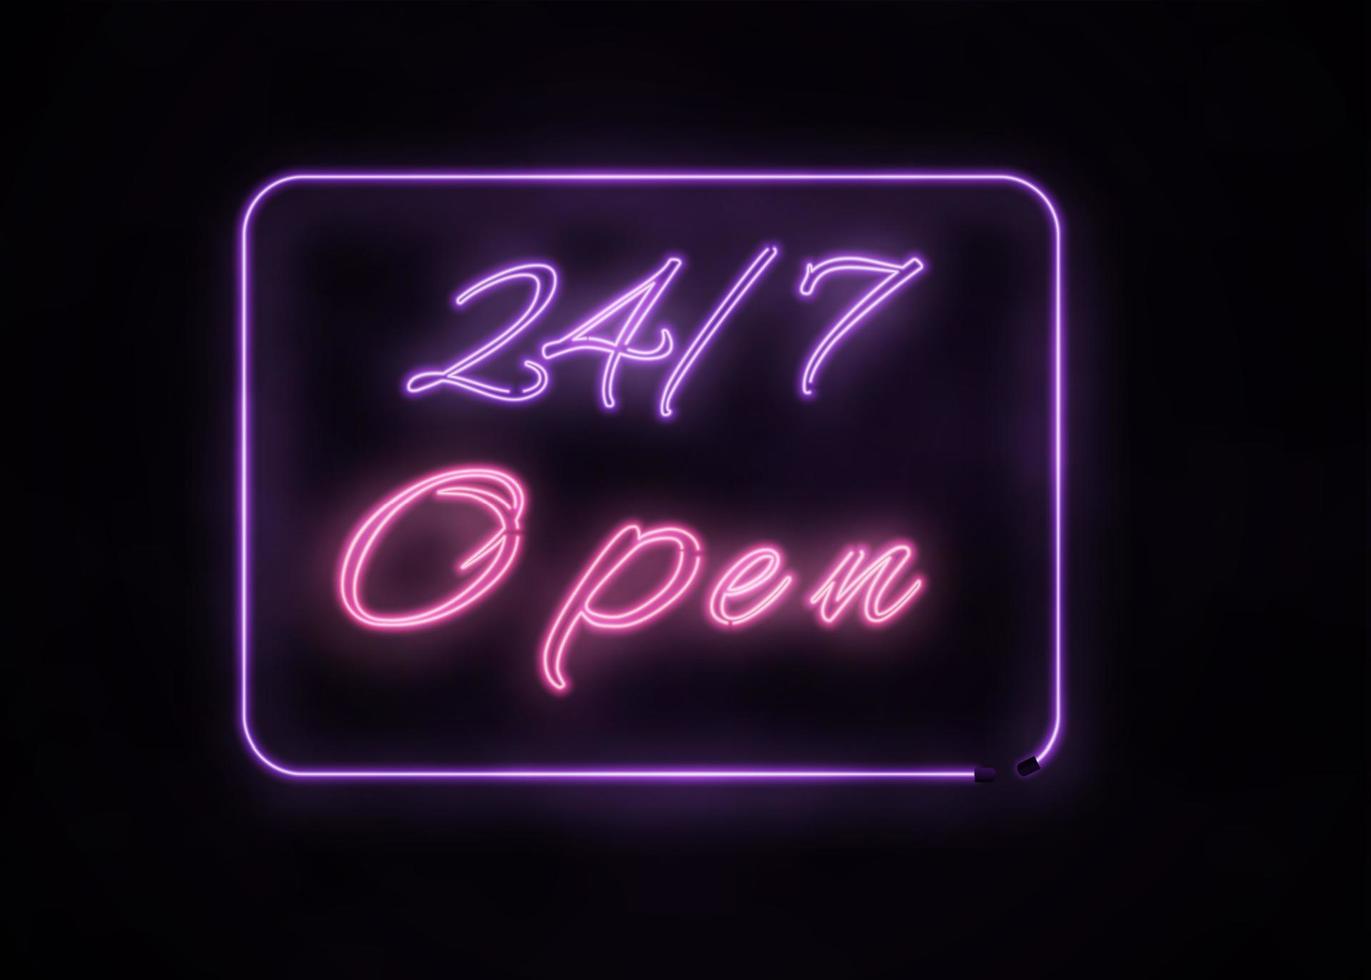 neon aberto 24 7 assinar em fundo preto. vetor